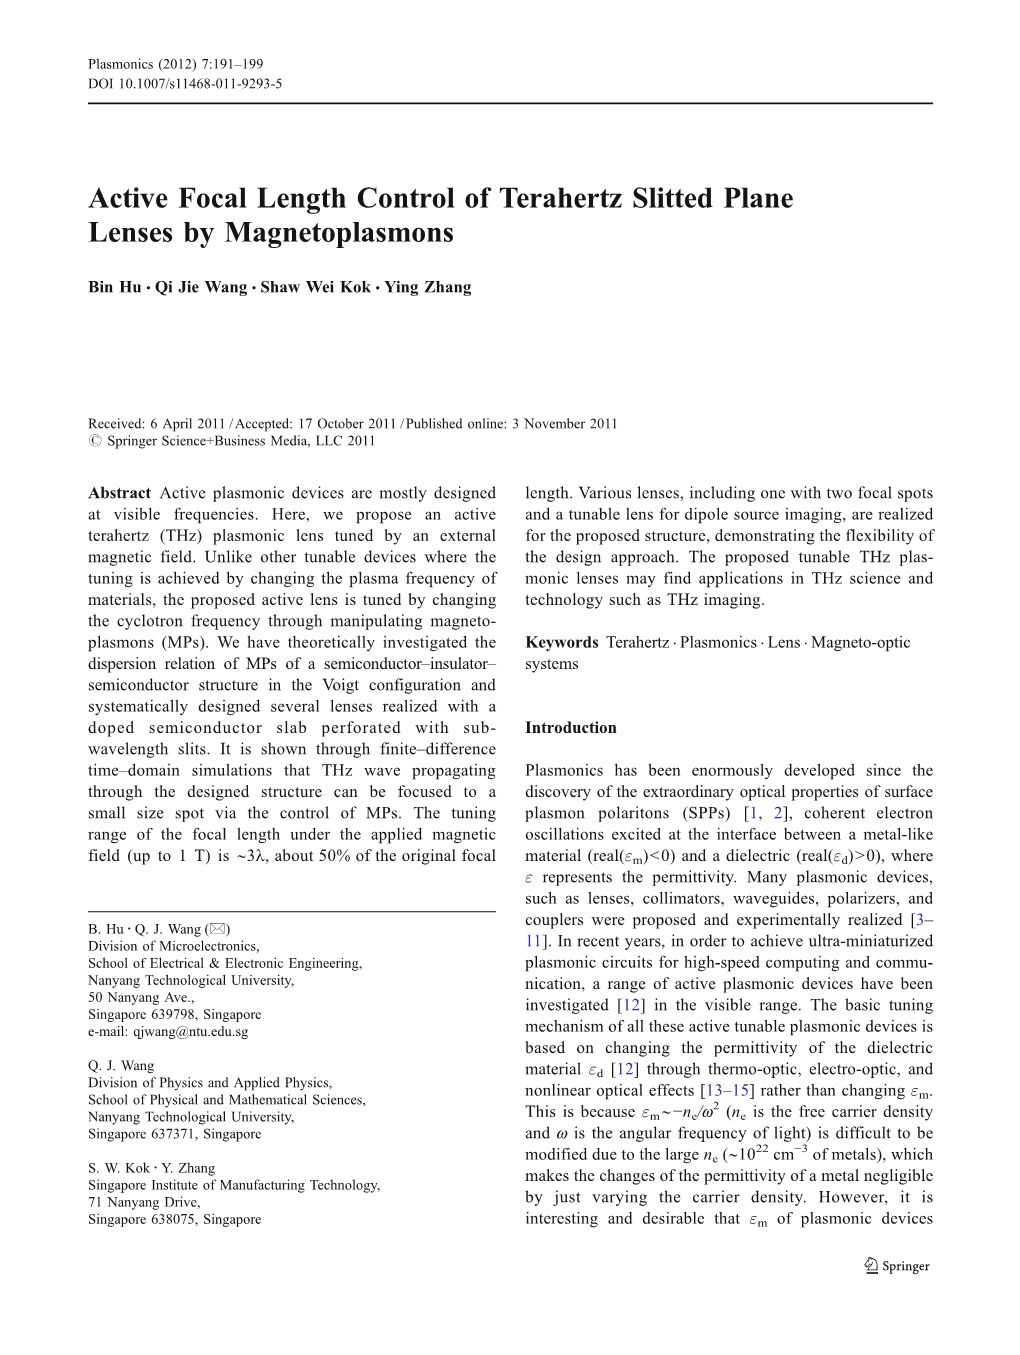 Active Focal Length Control of Terahertz Slitted Plane Lenses by Magnetoplasmons